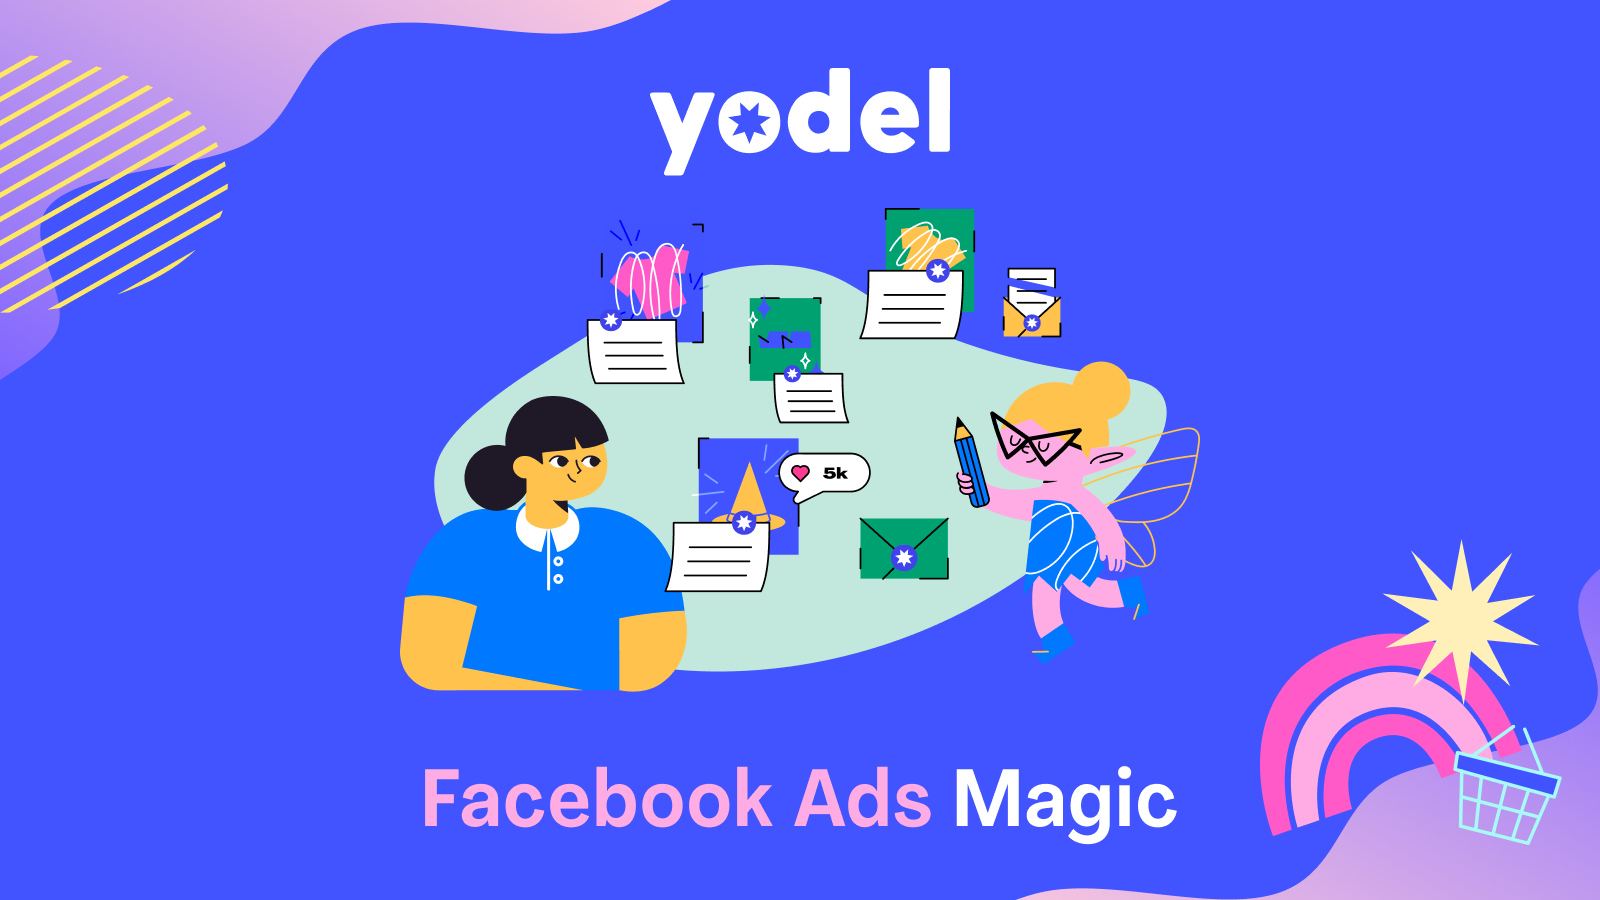 由Yodel提供的Facebook Ads Magic